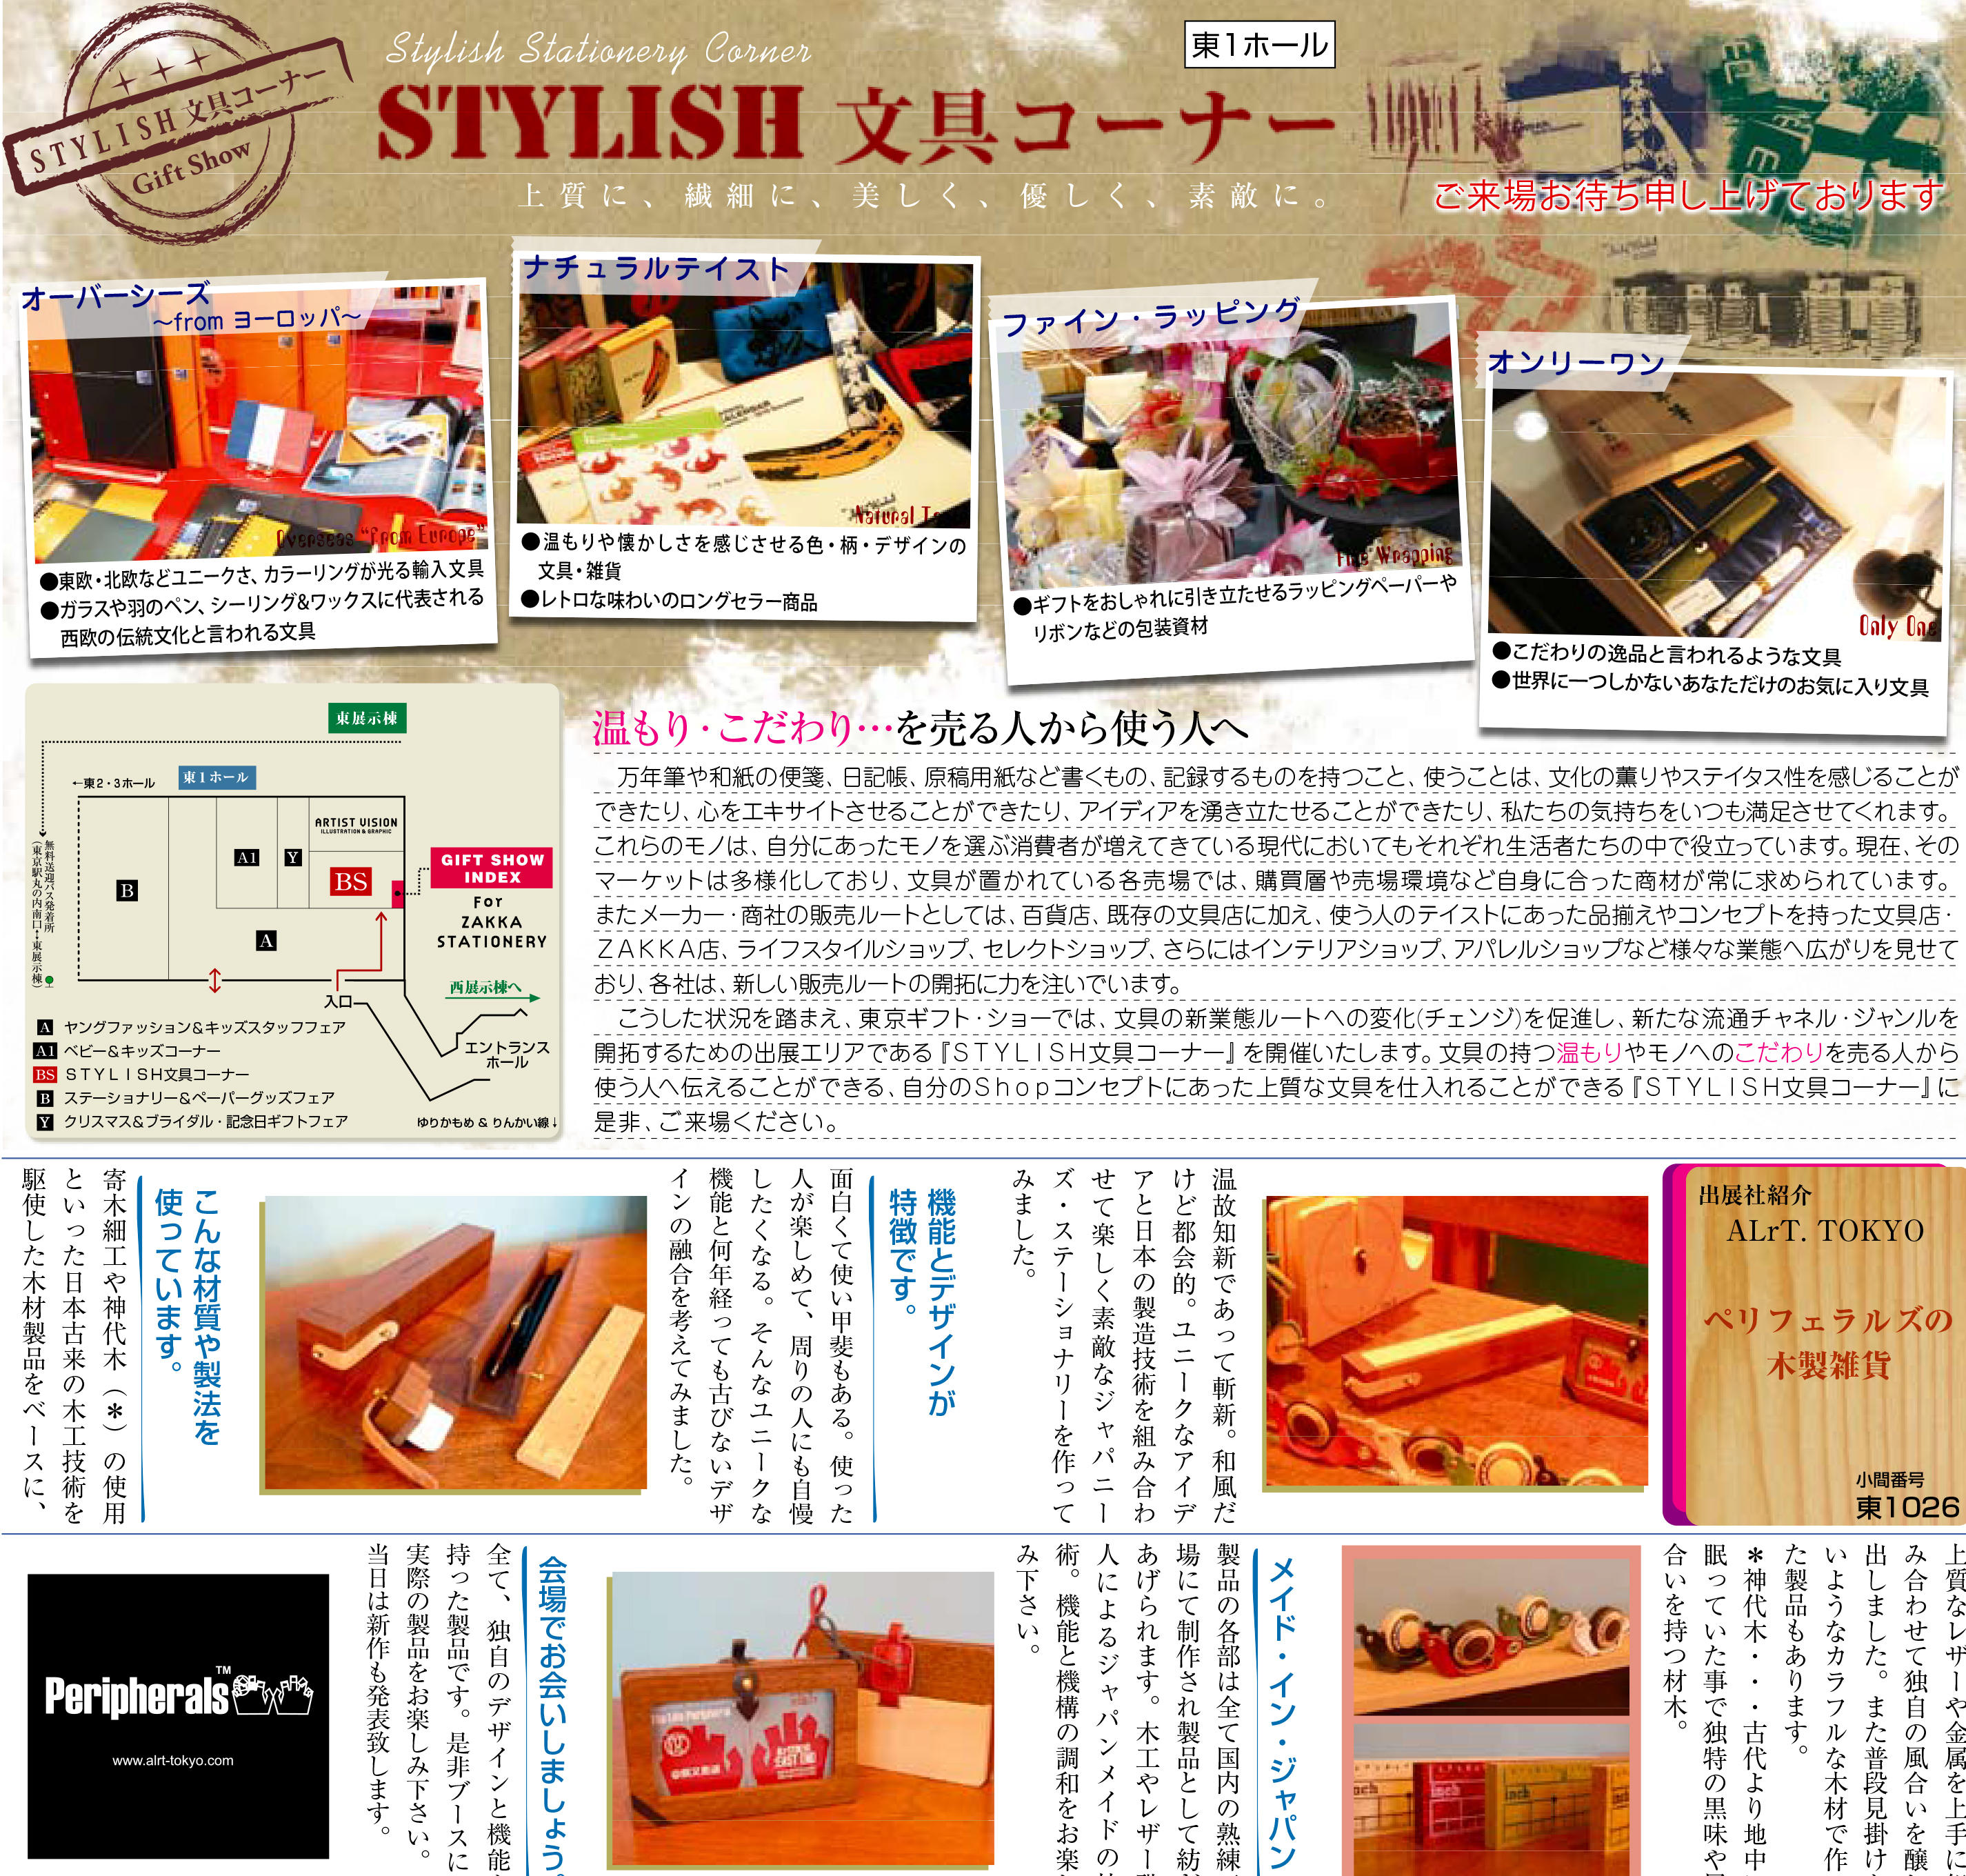 http://alrt.tokyo/news/giftnews20100101.jpg